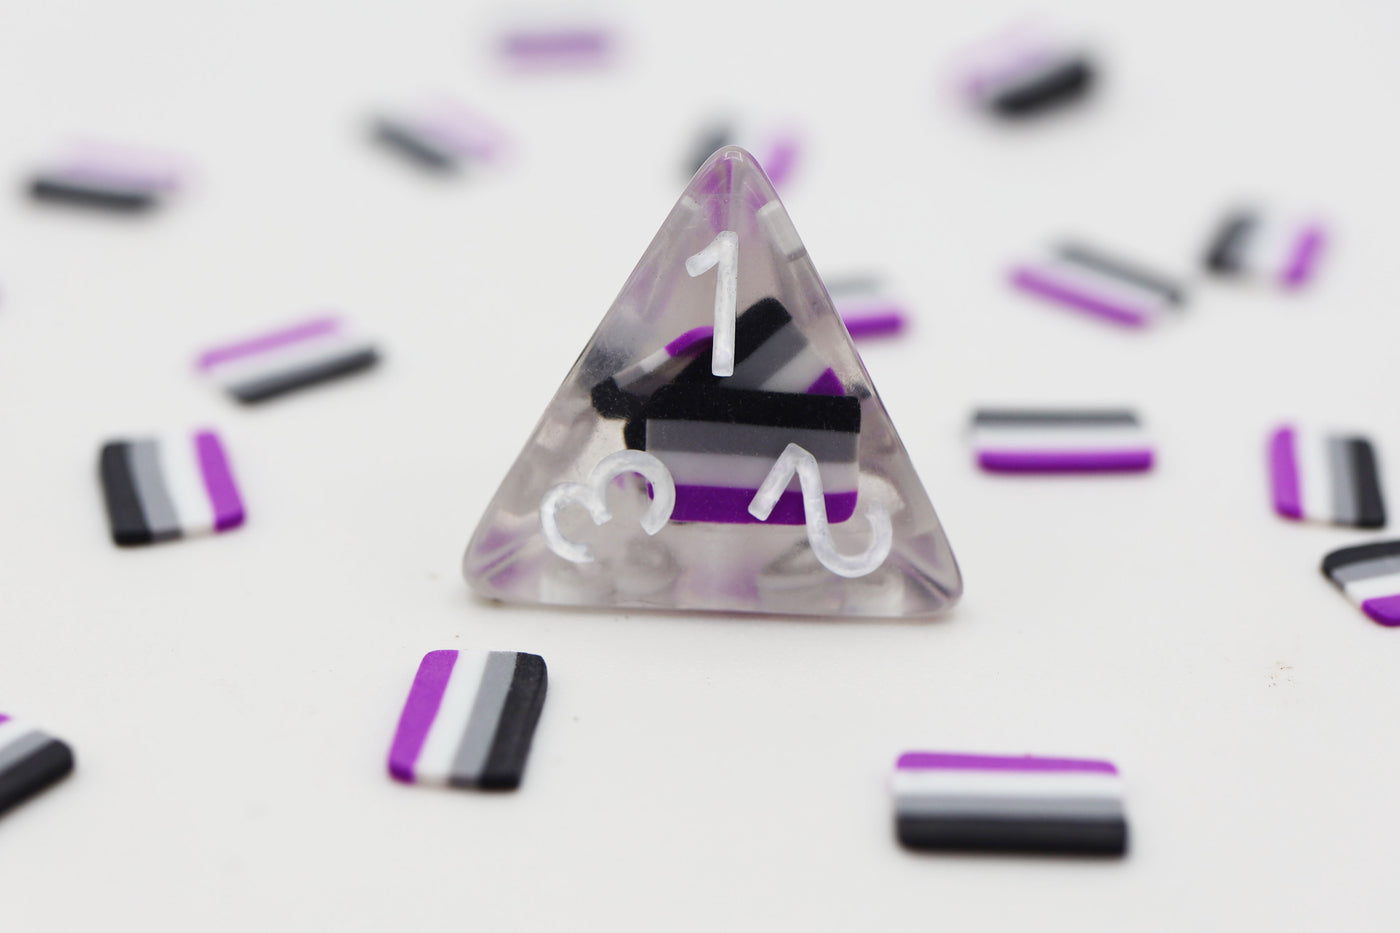 Asexual Flag RPG Dice Set Plastic Dice Foam Brain Games